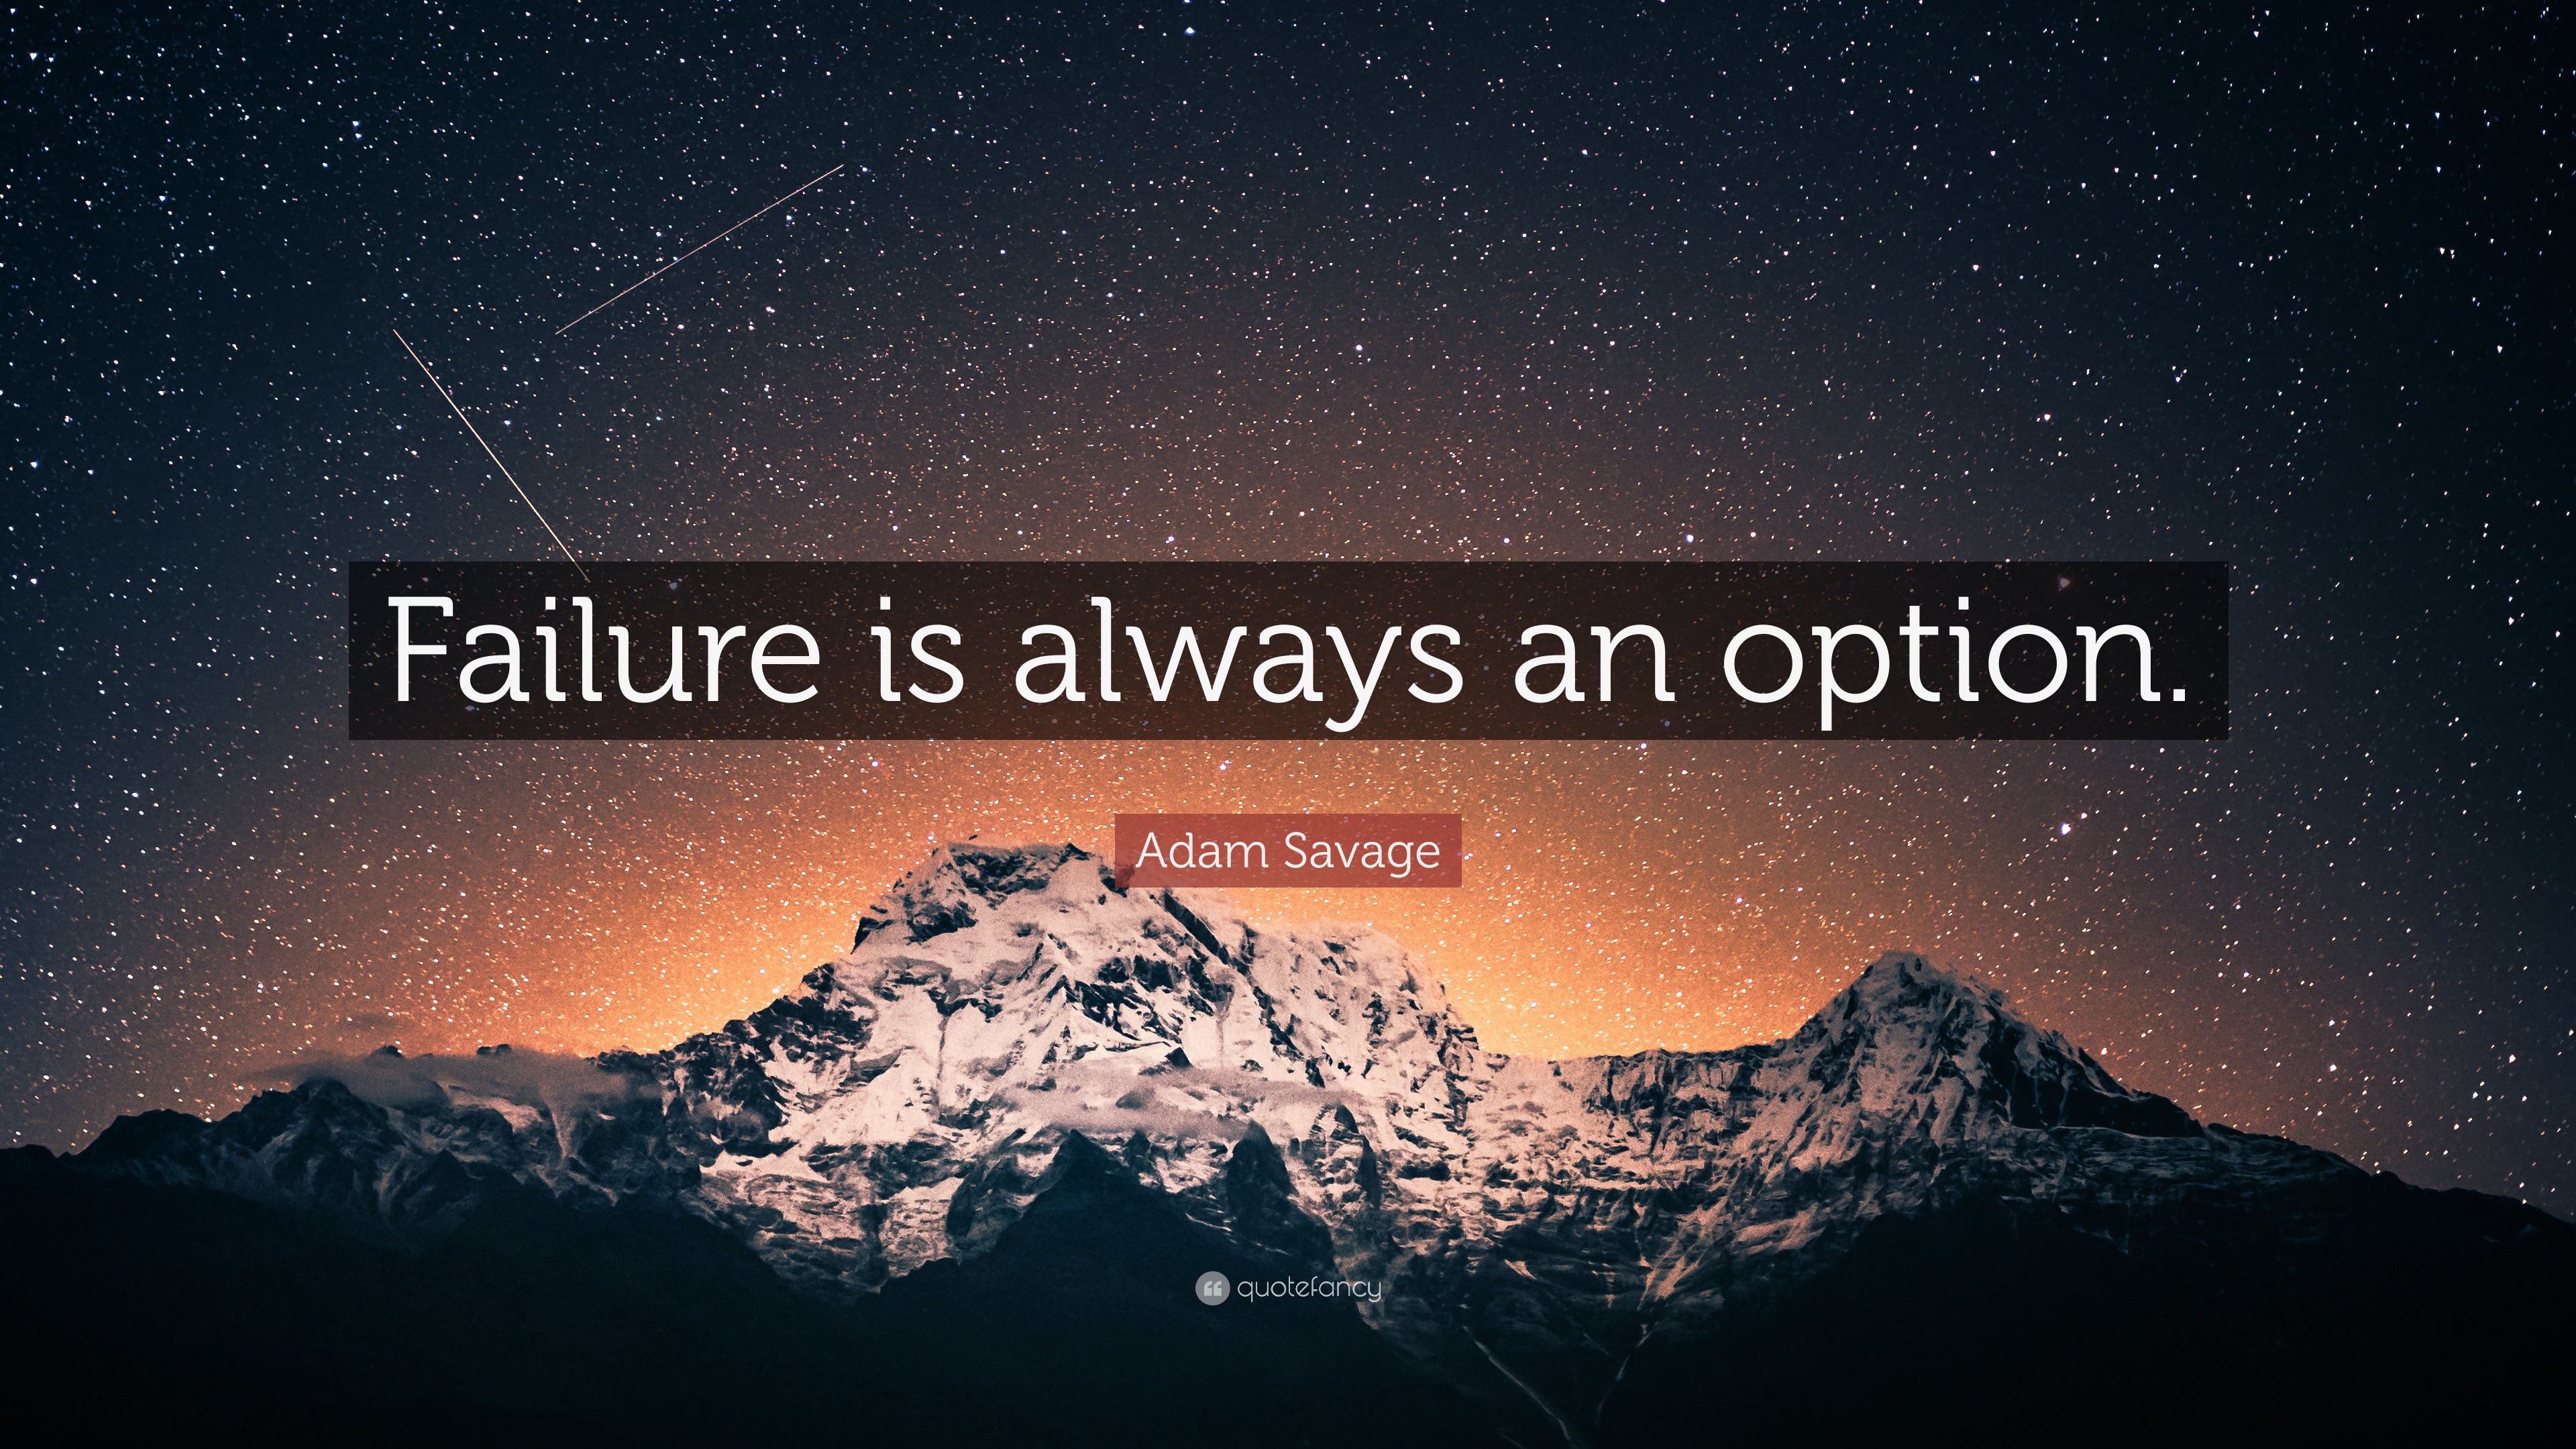 Adam Savage Quote: “Failure is always an option.”